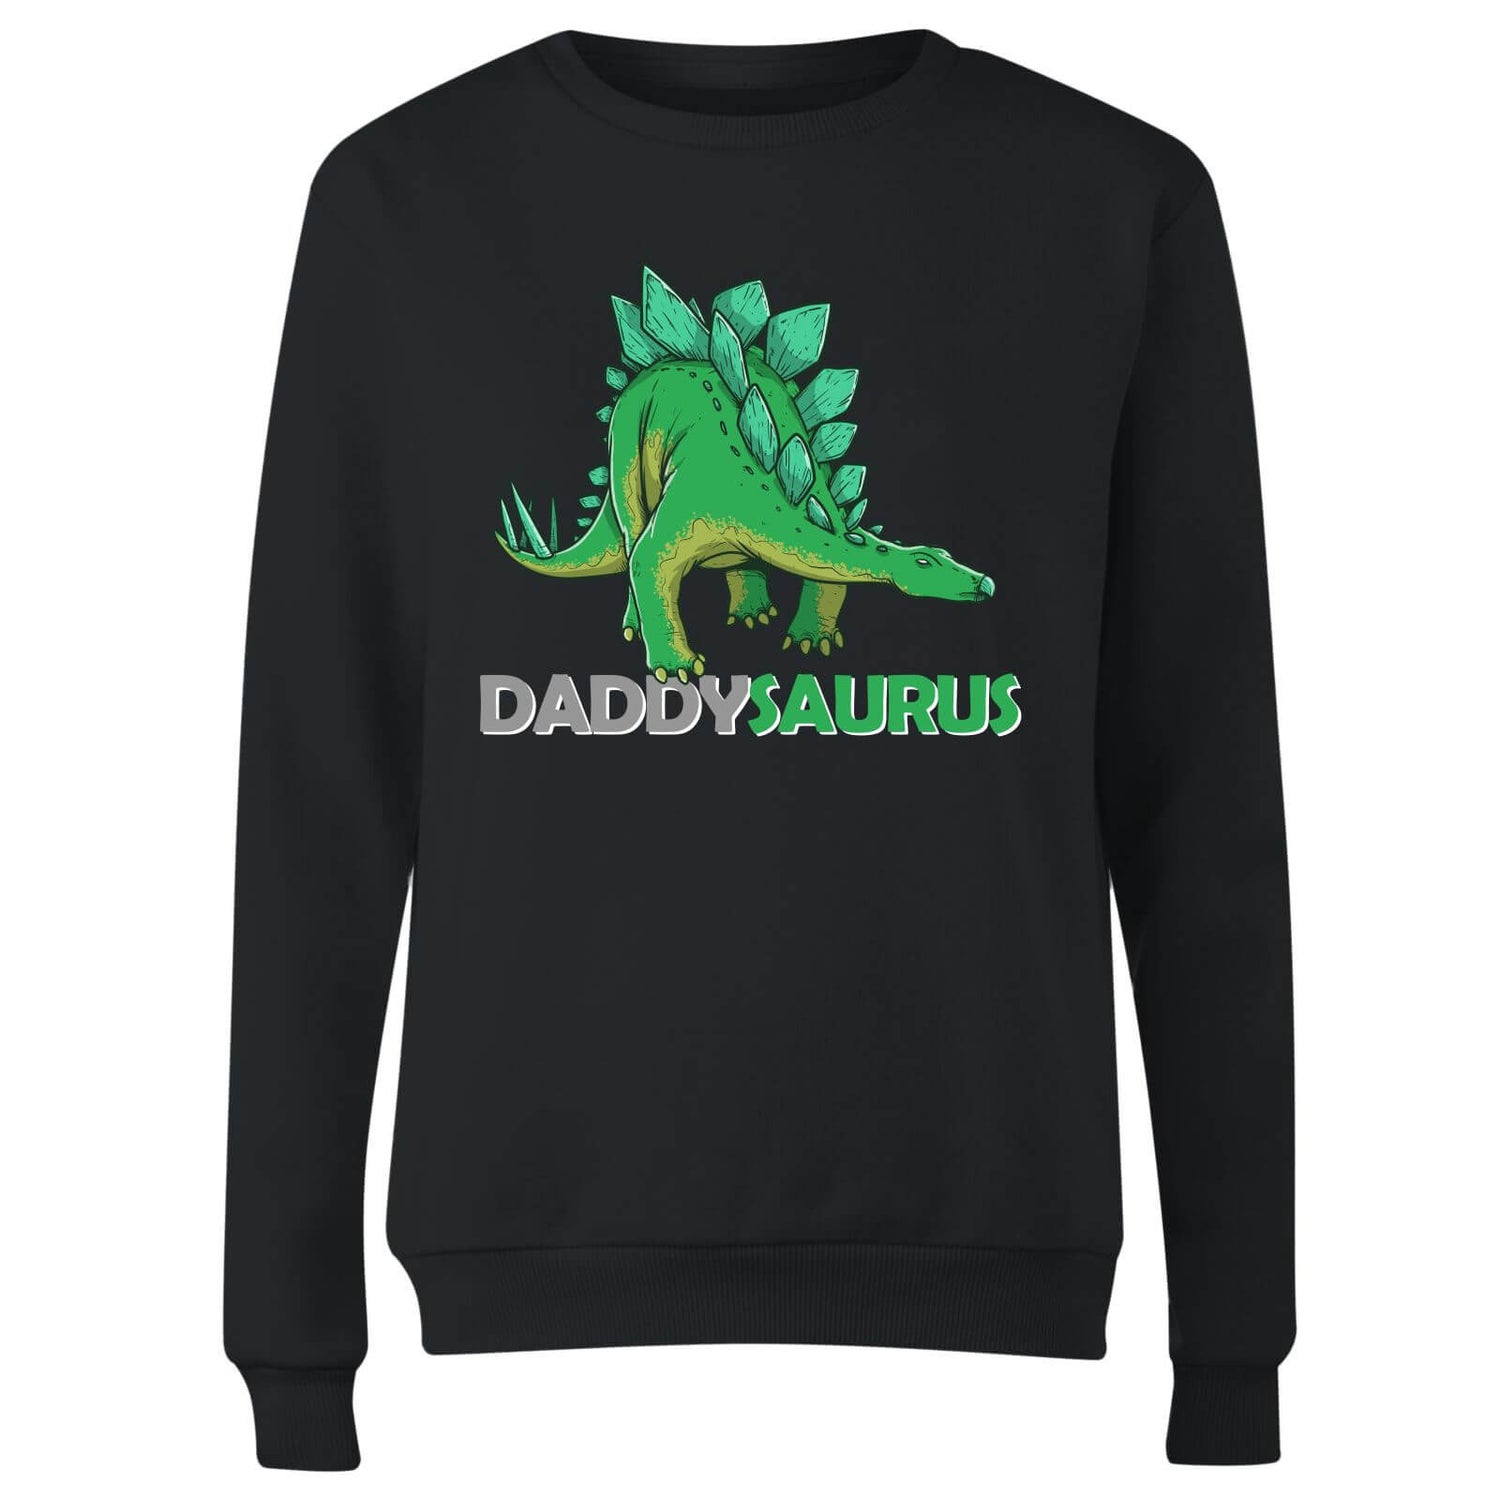 Daddysaurus Women's Sweatshirt - Black